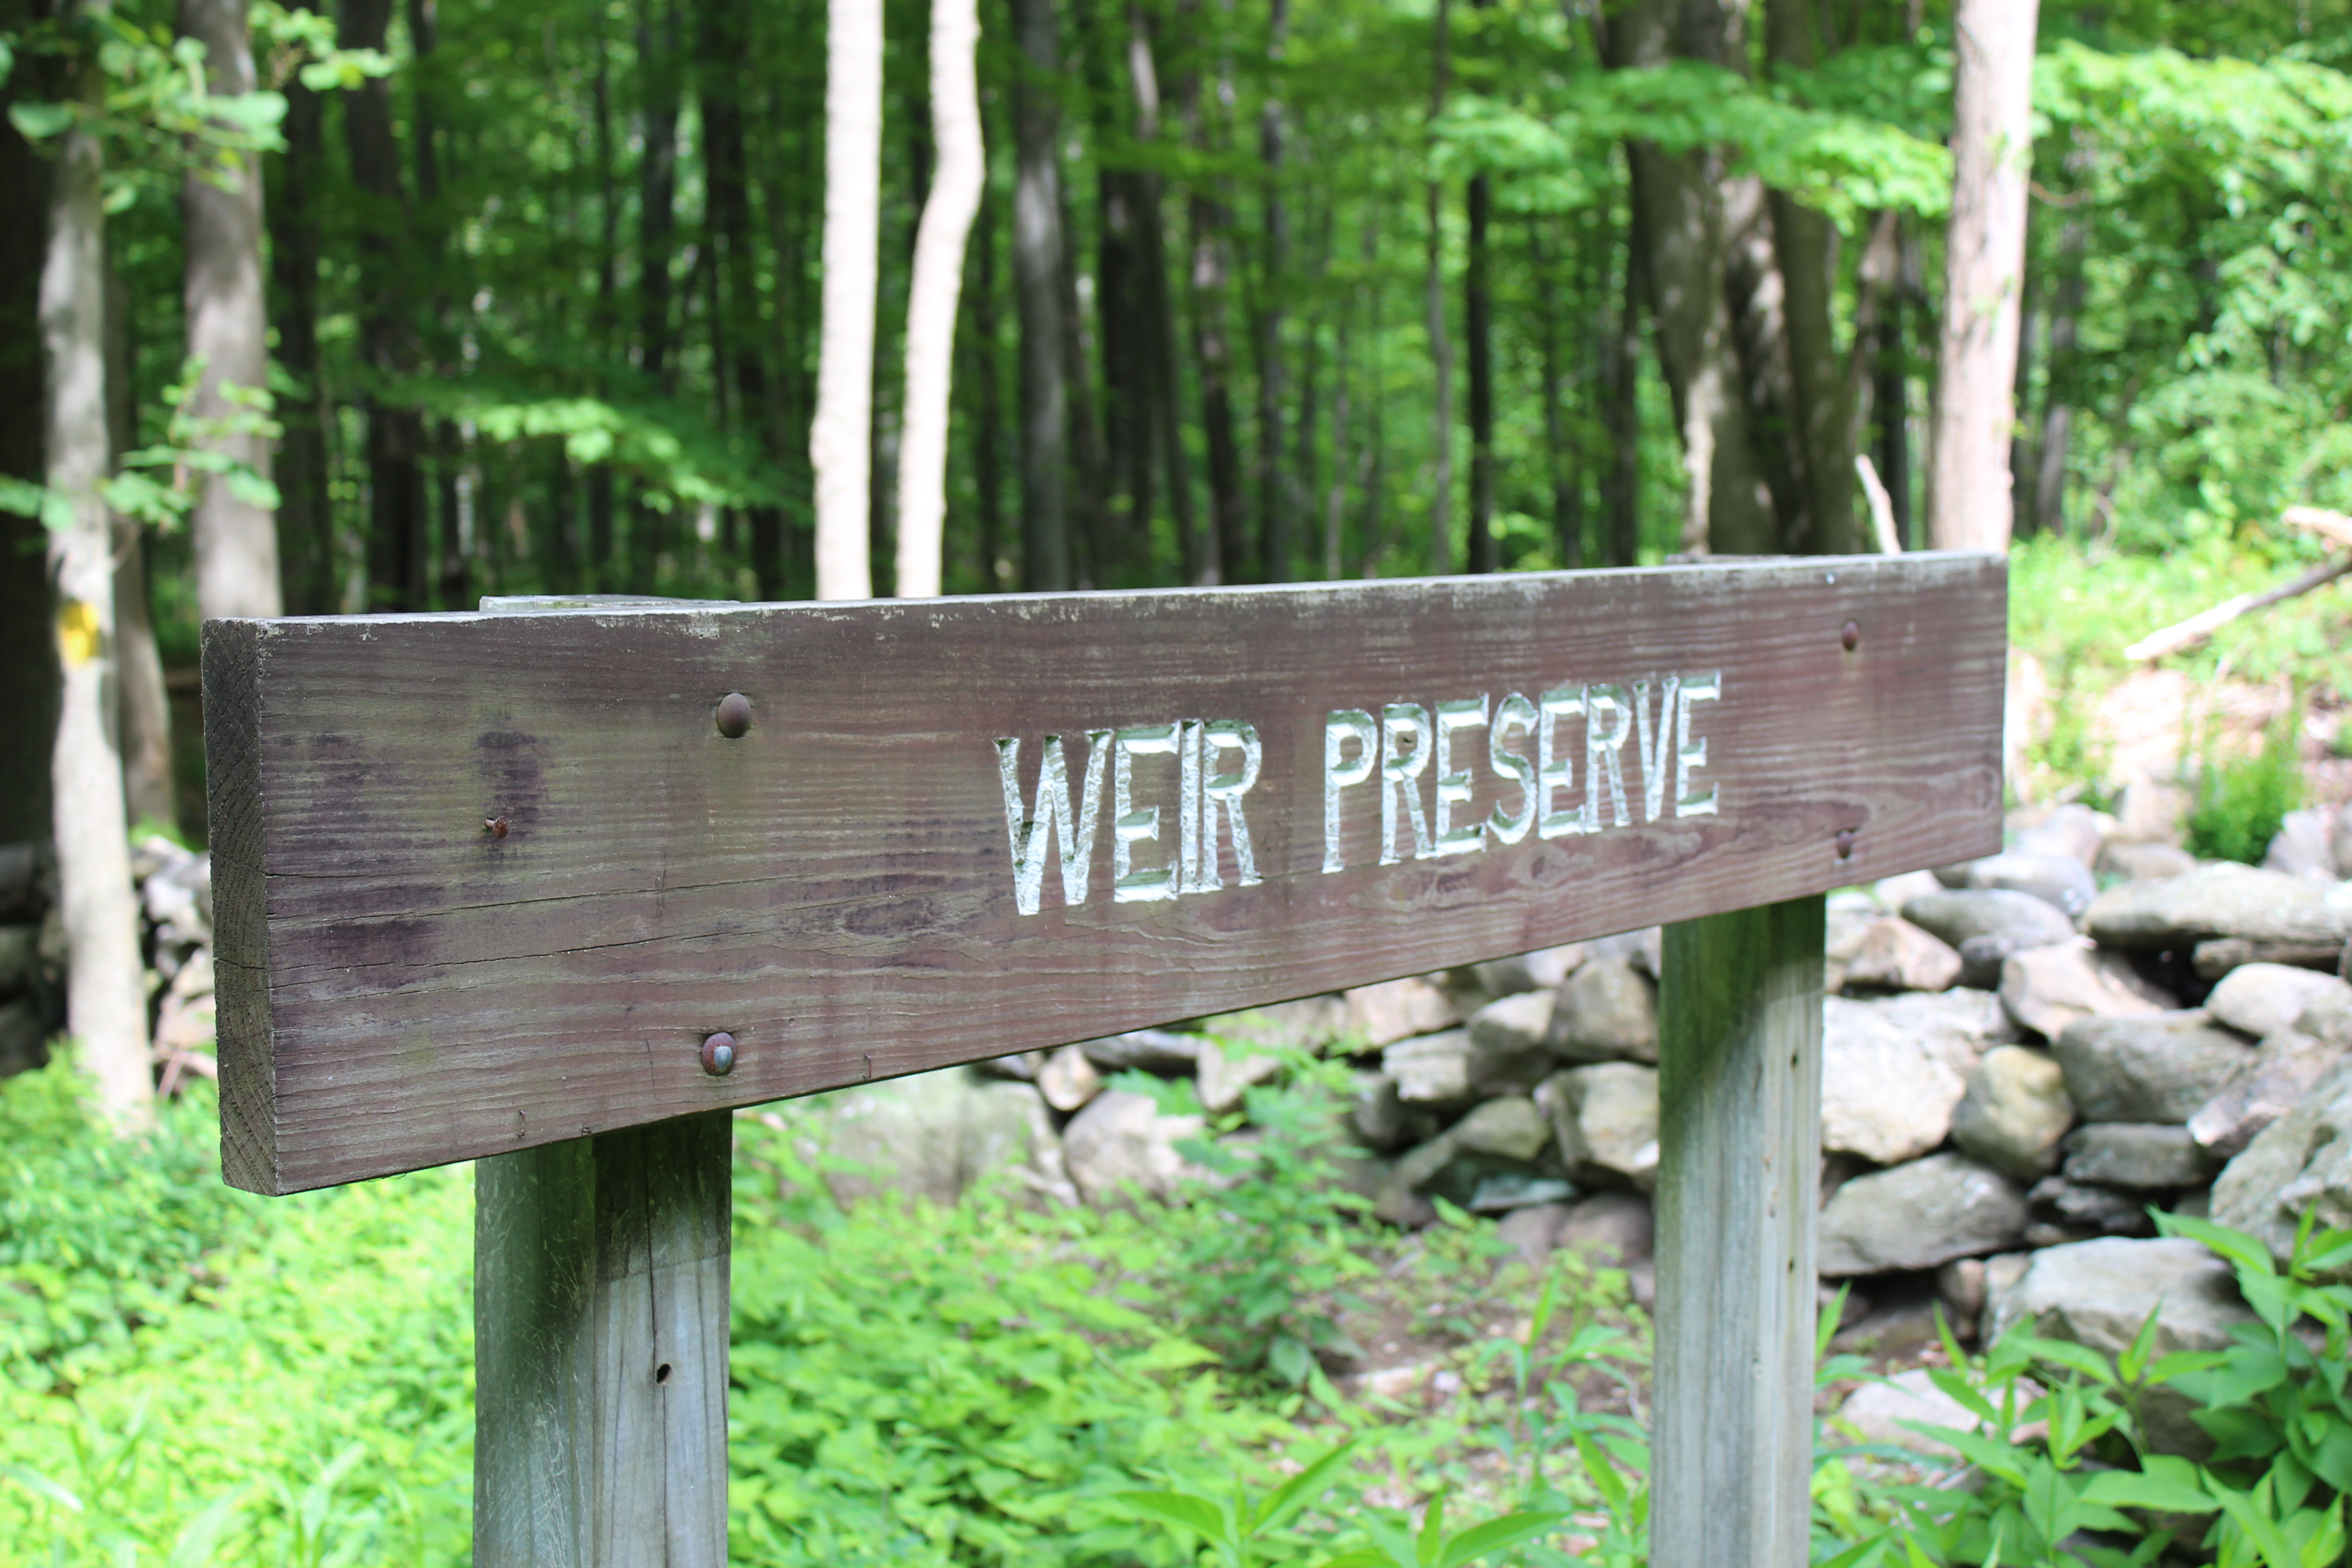 Weir preserve